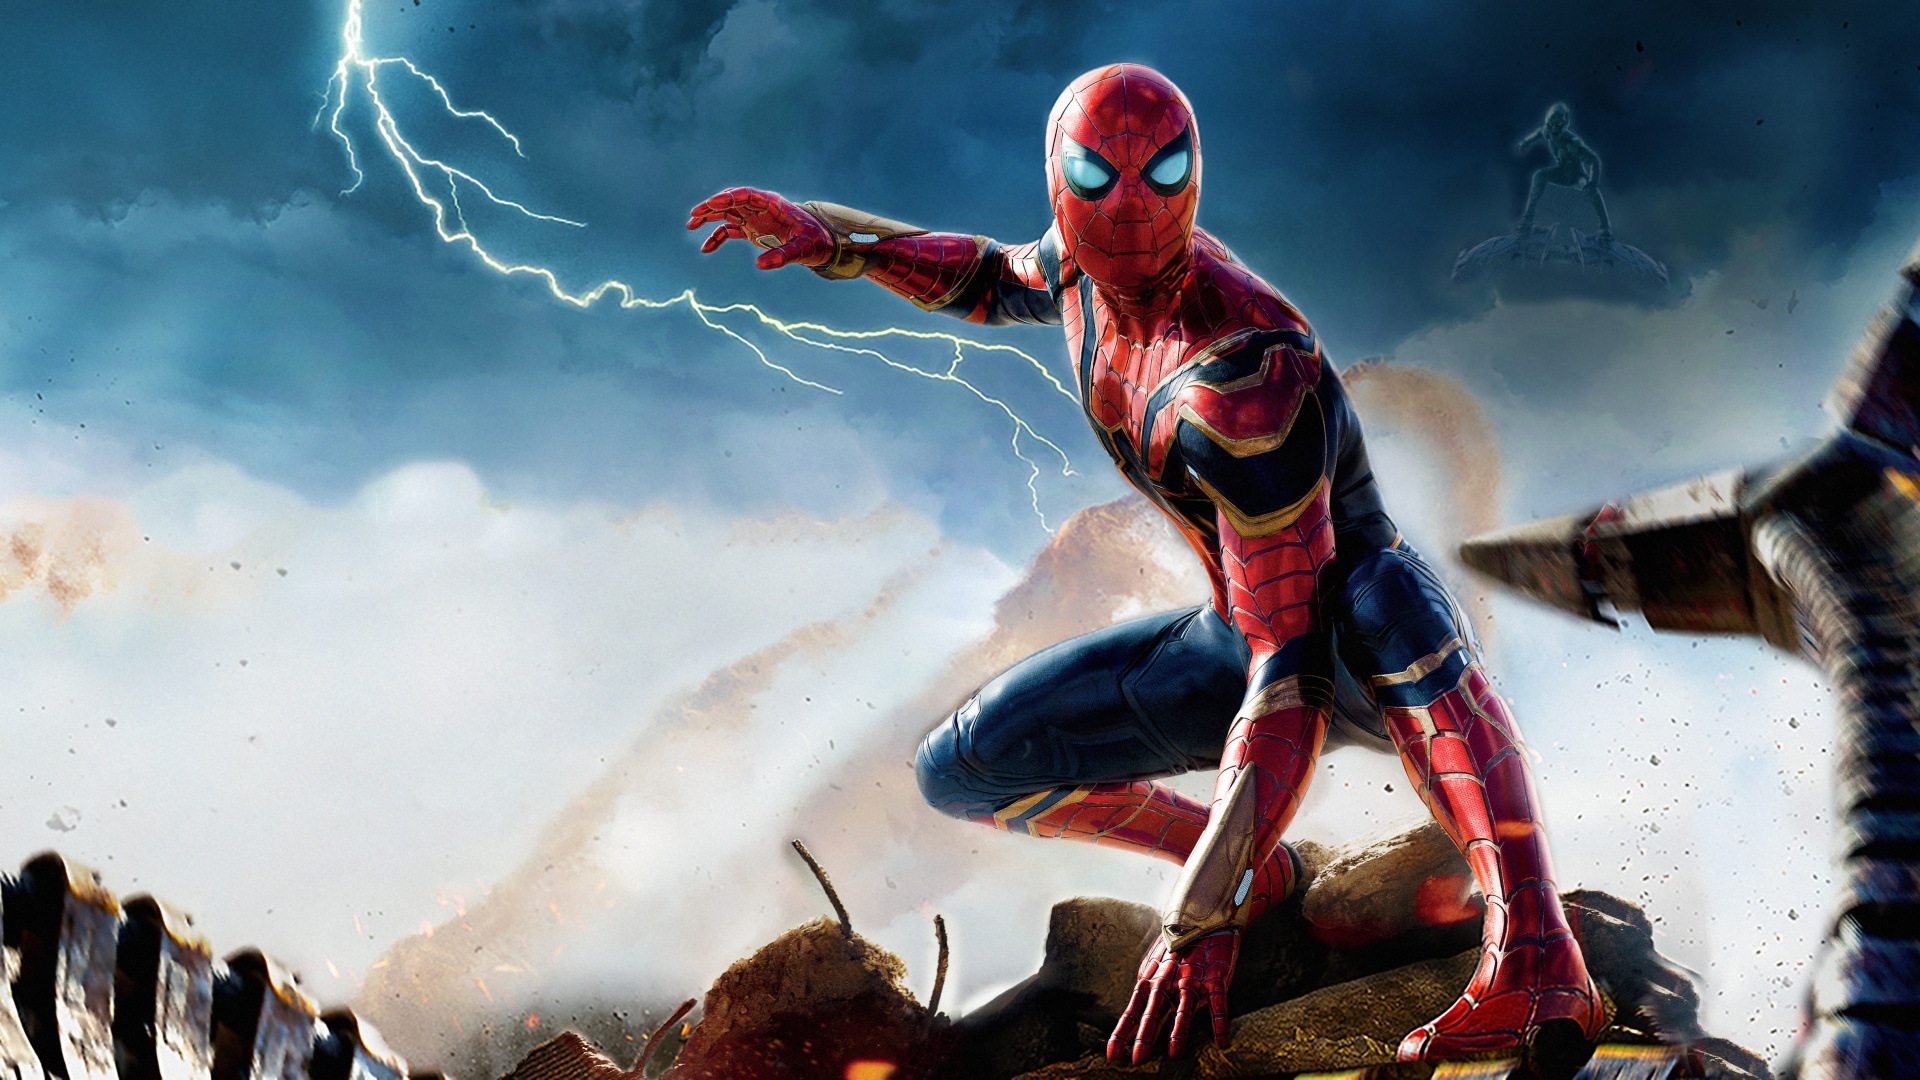 Spider-Man: No Way Home Wallpaper 4K, 2021 Movies